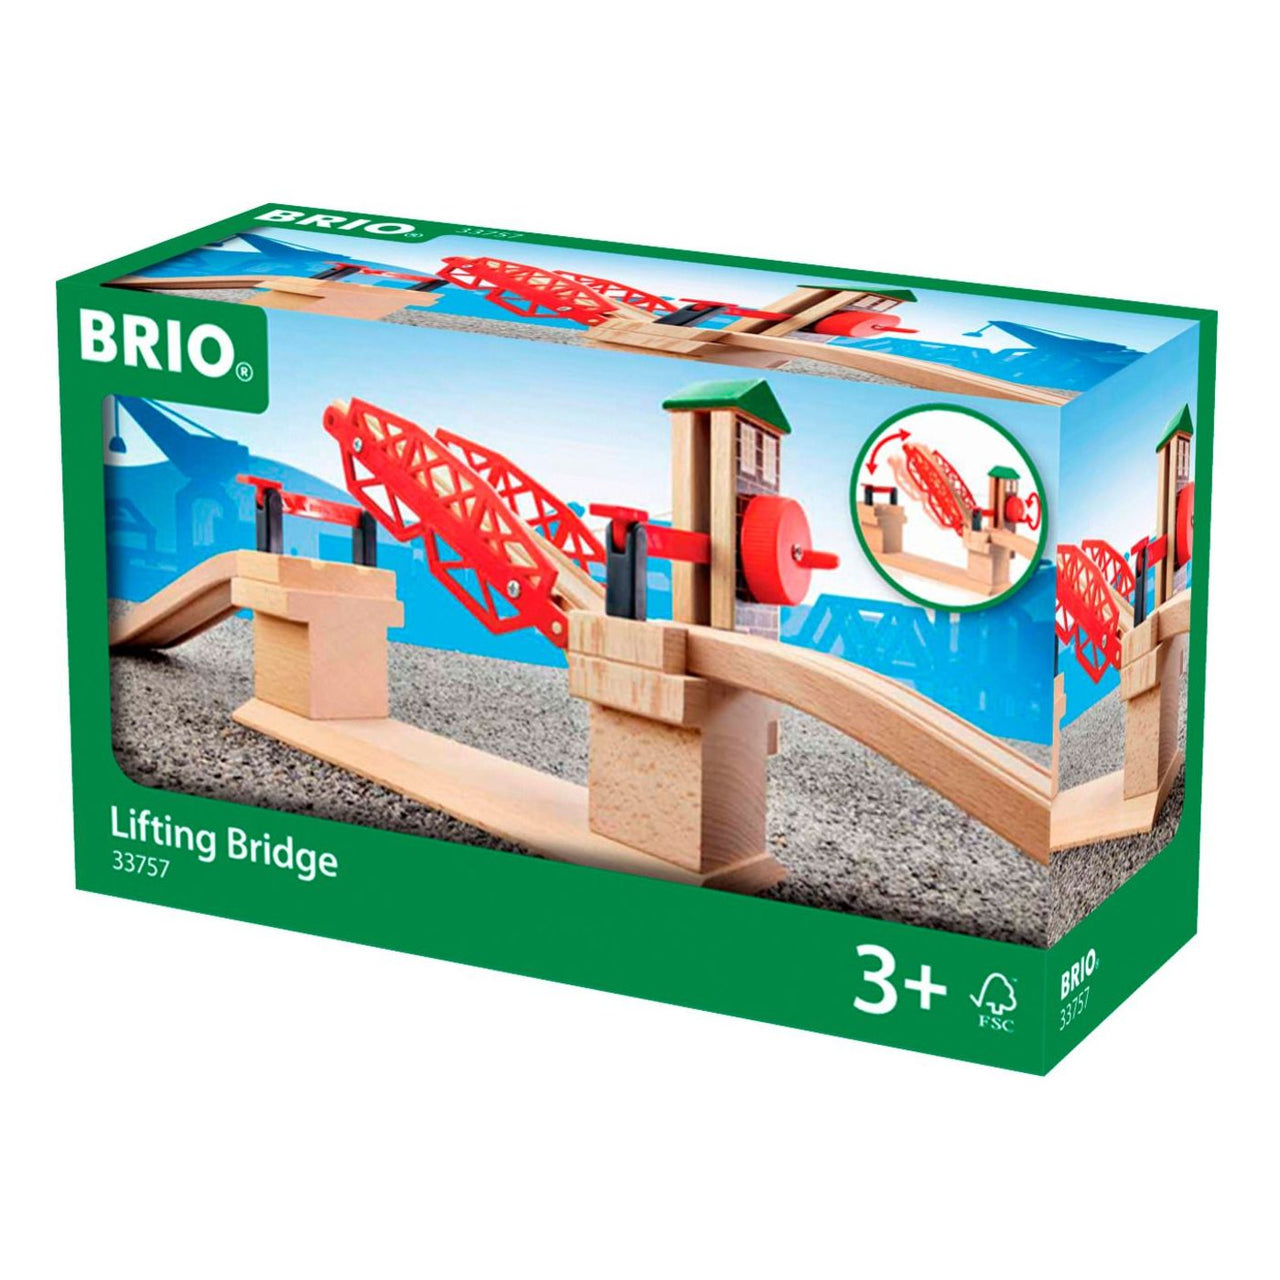 Brio Lifting Bridge BRIO